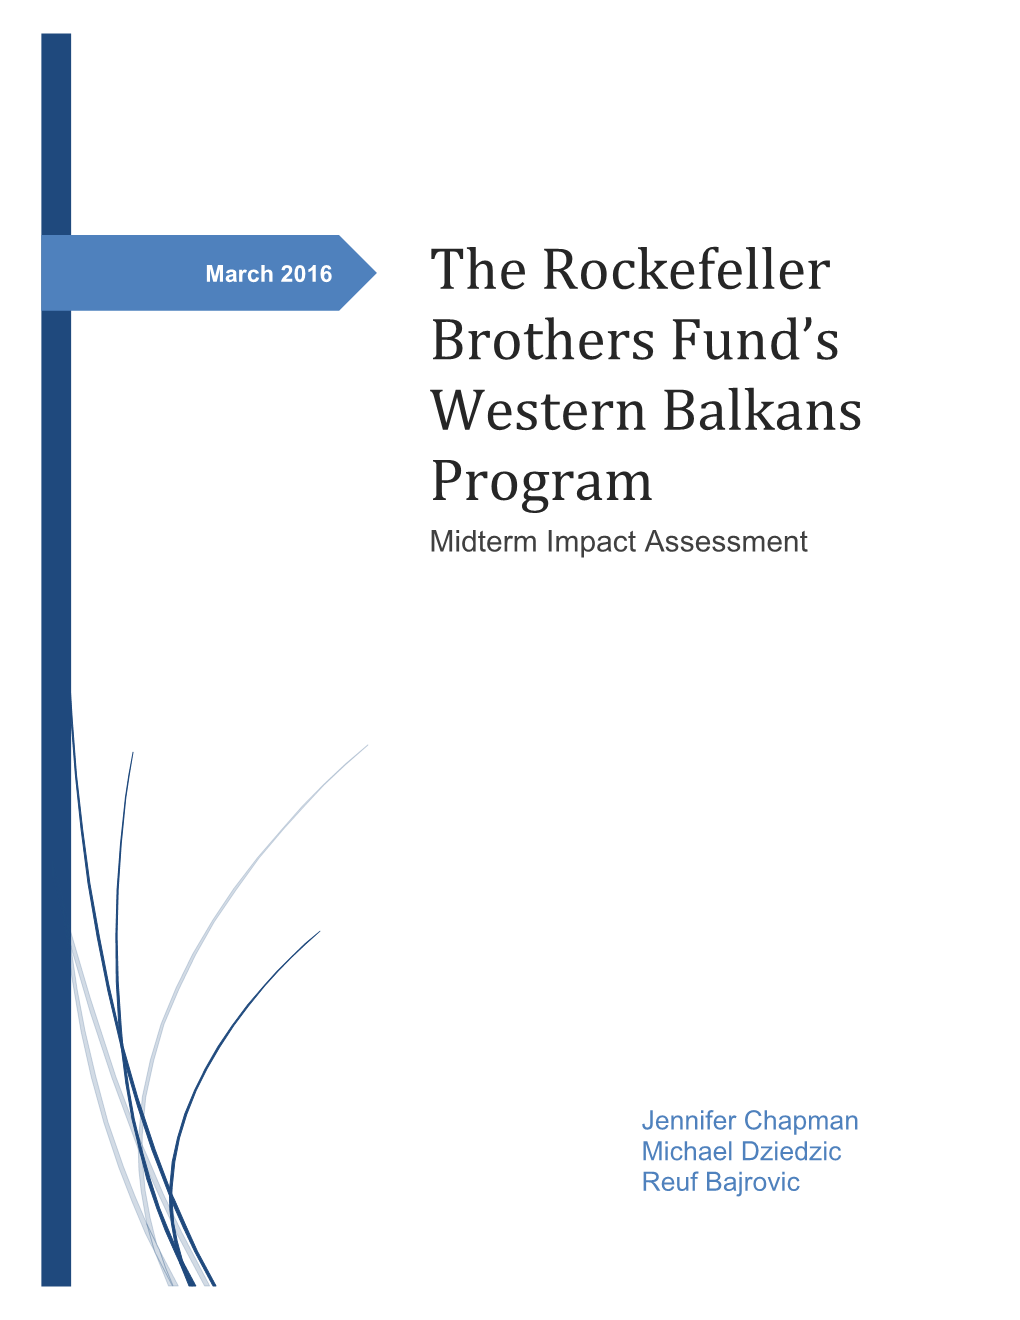 The Rockefeller Brothers Fund's Western Balkans Program